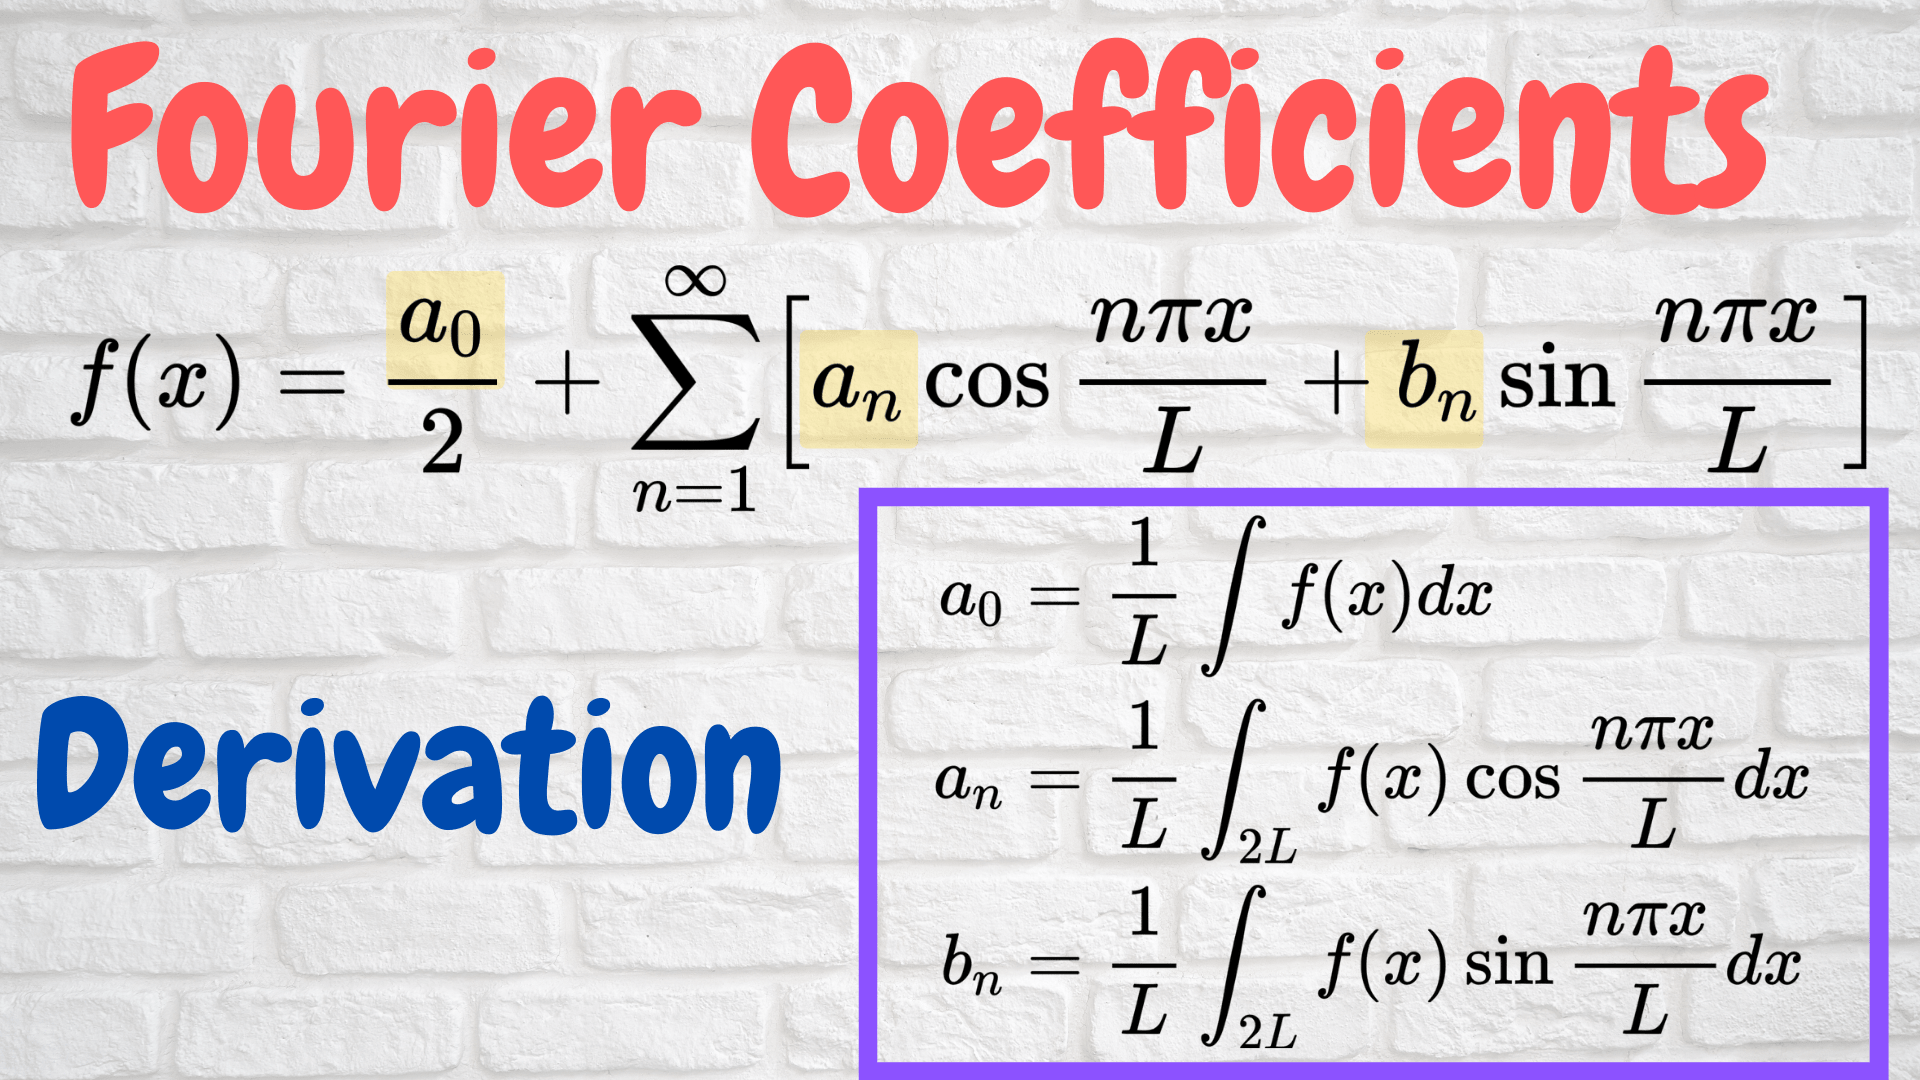 Fourier series coefficients - BragitOff.com